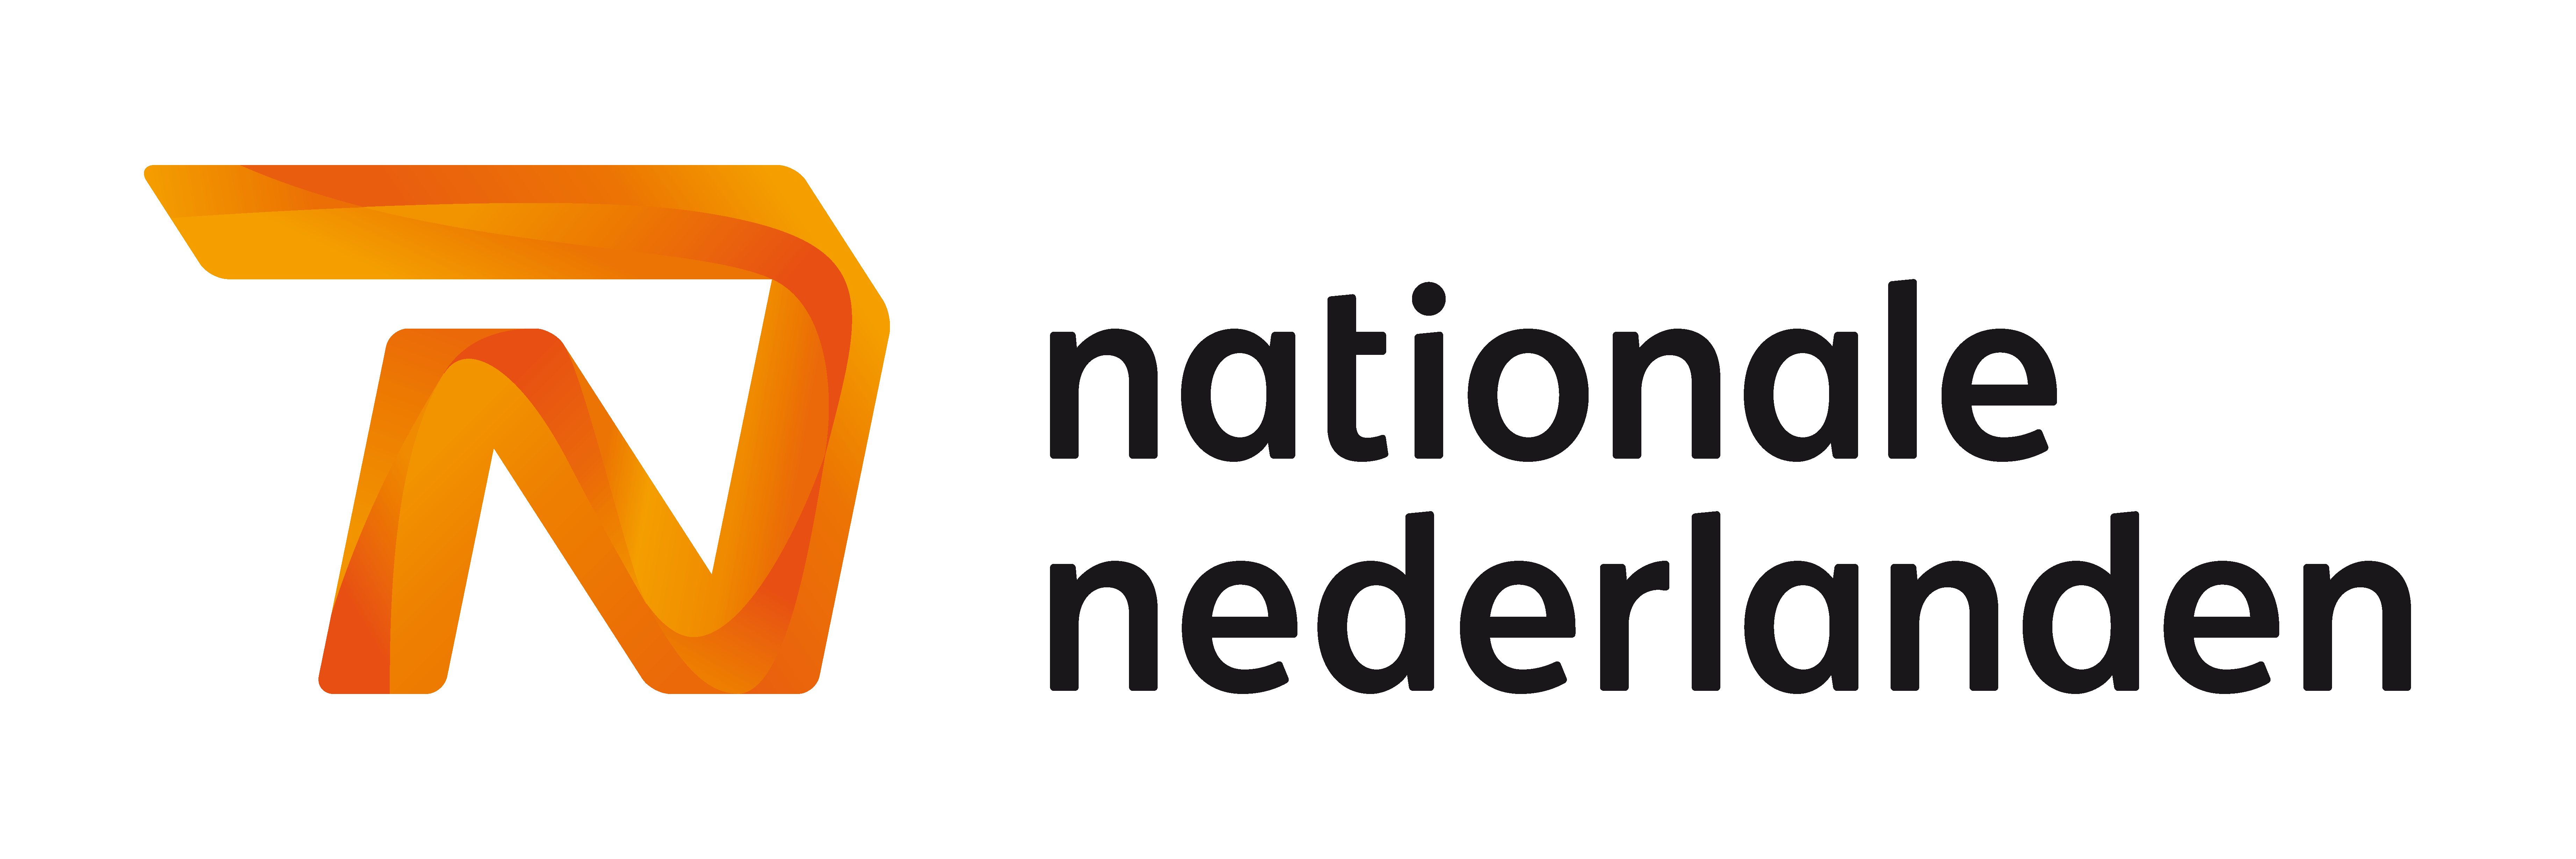 KICK-OFF Nationale-Nederlanden  Corporate Clients